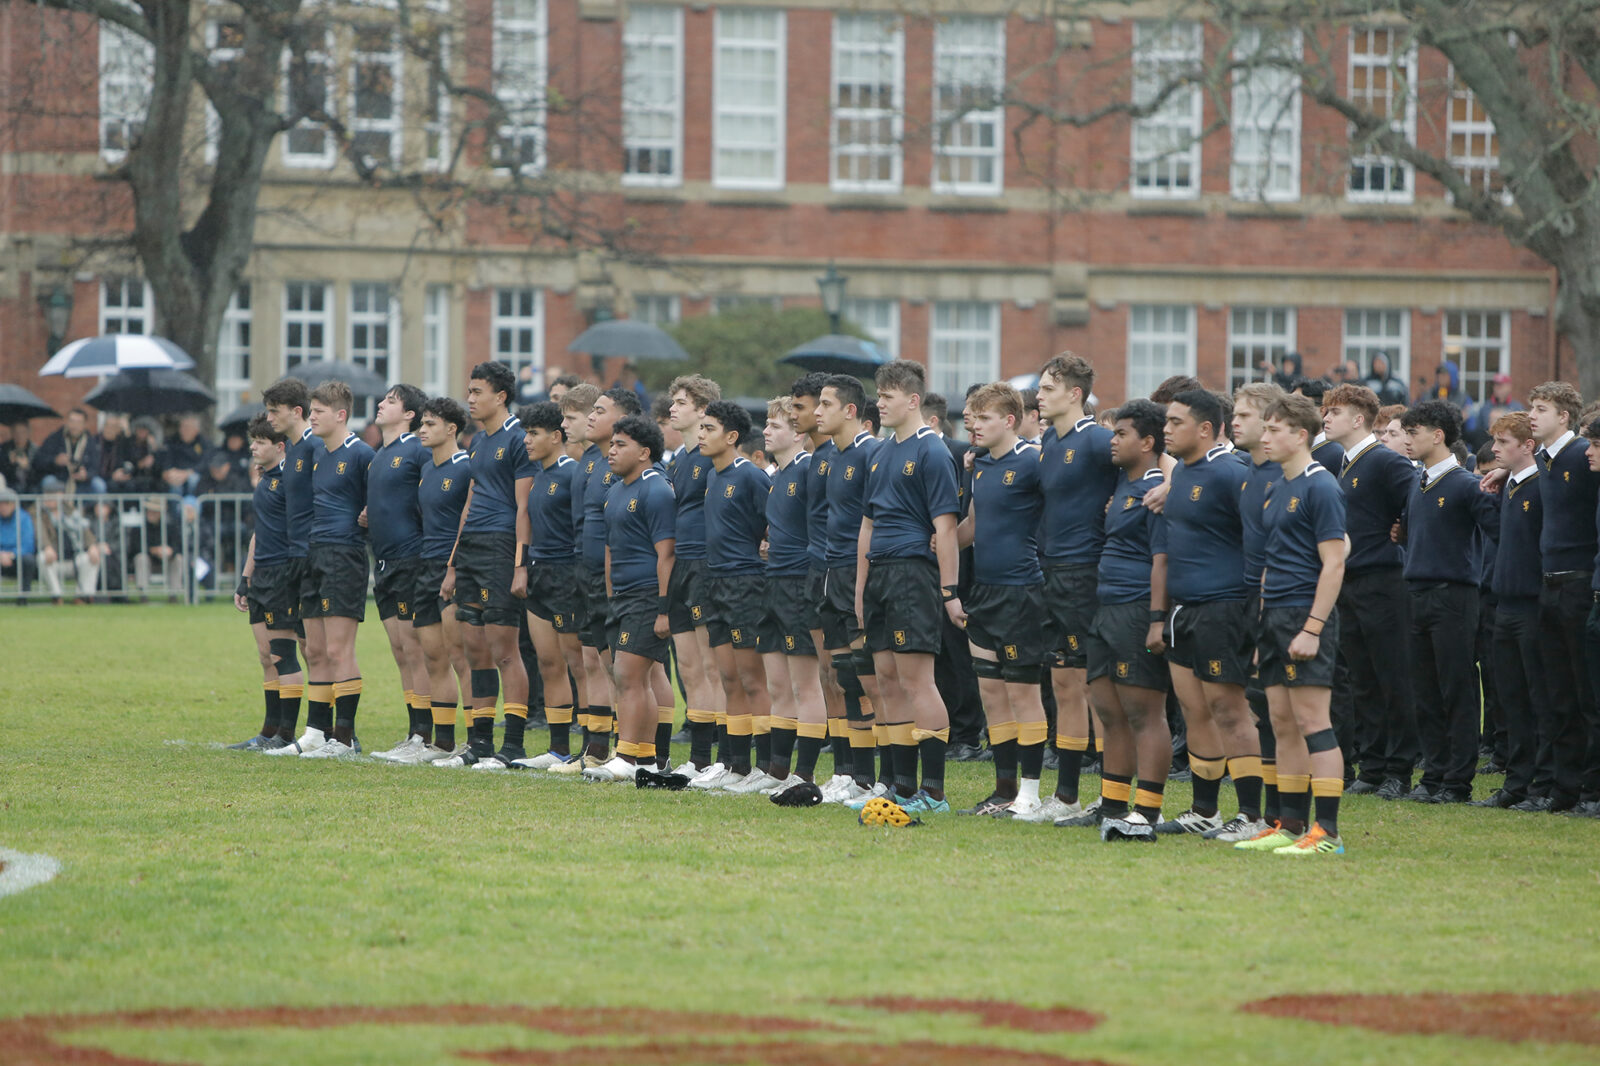 Rugby team-Auckland Grammar School Top New Zeland Boys boarding school